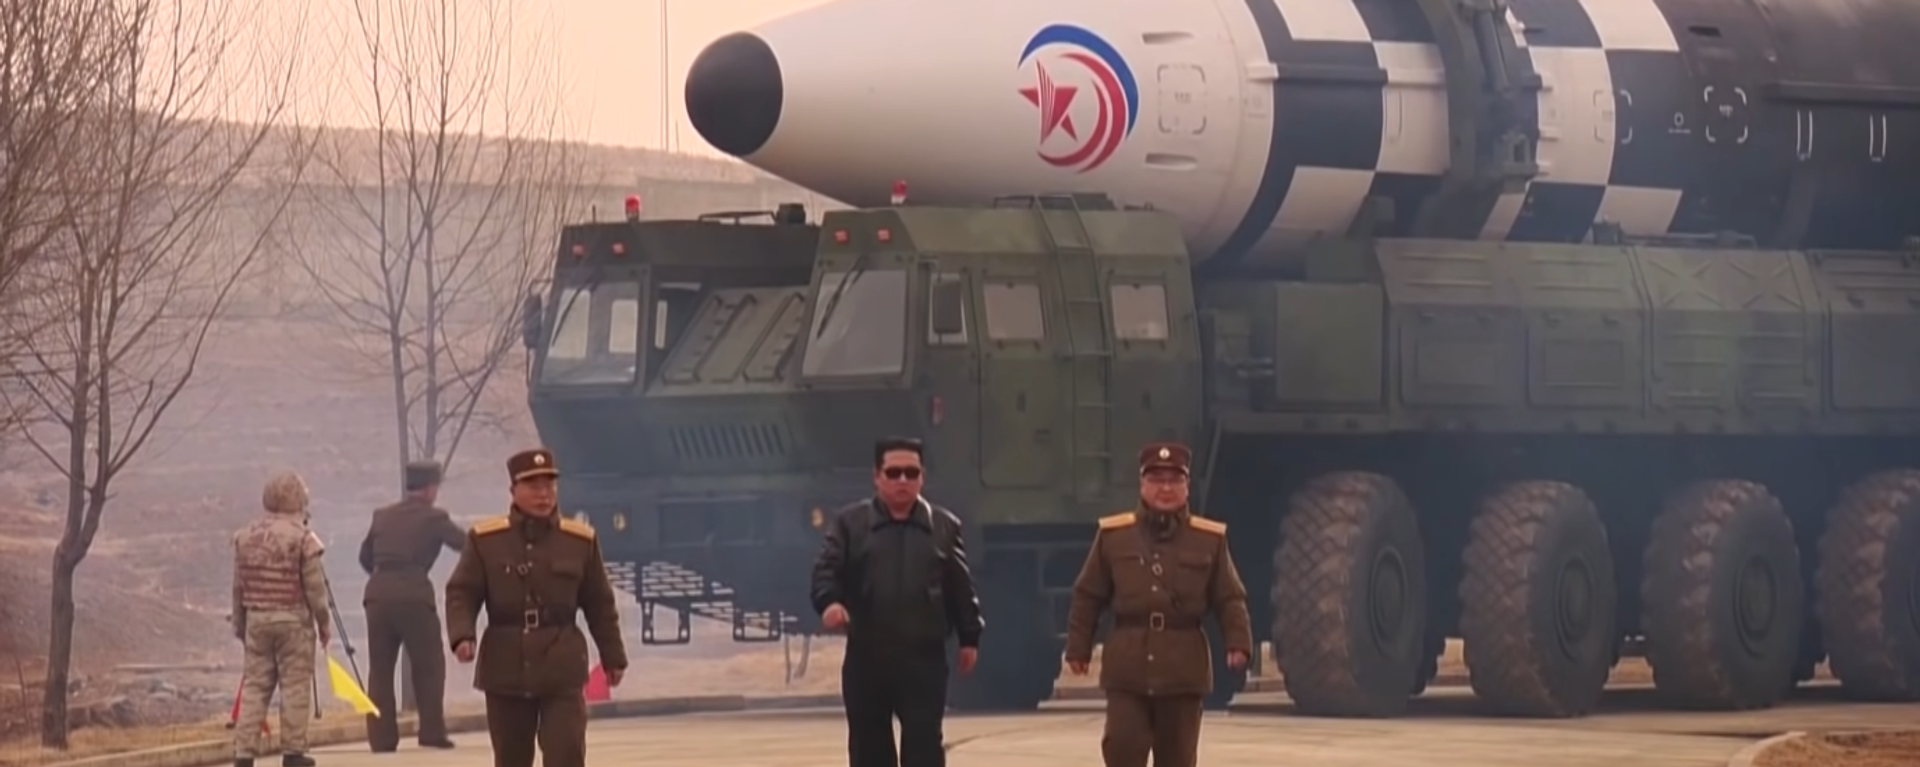 North Korean leader Kim Jong-un takes part in launch of heavy intercontinental ballistic missile test. - Sputnik International, 1920, 27.10.2022